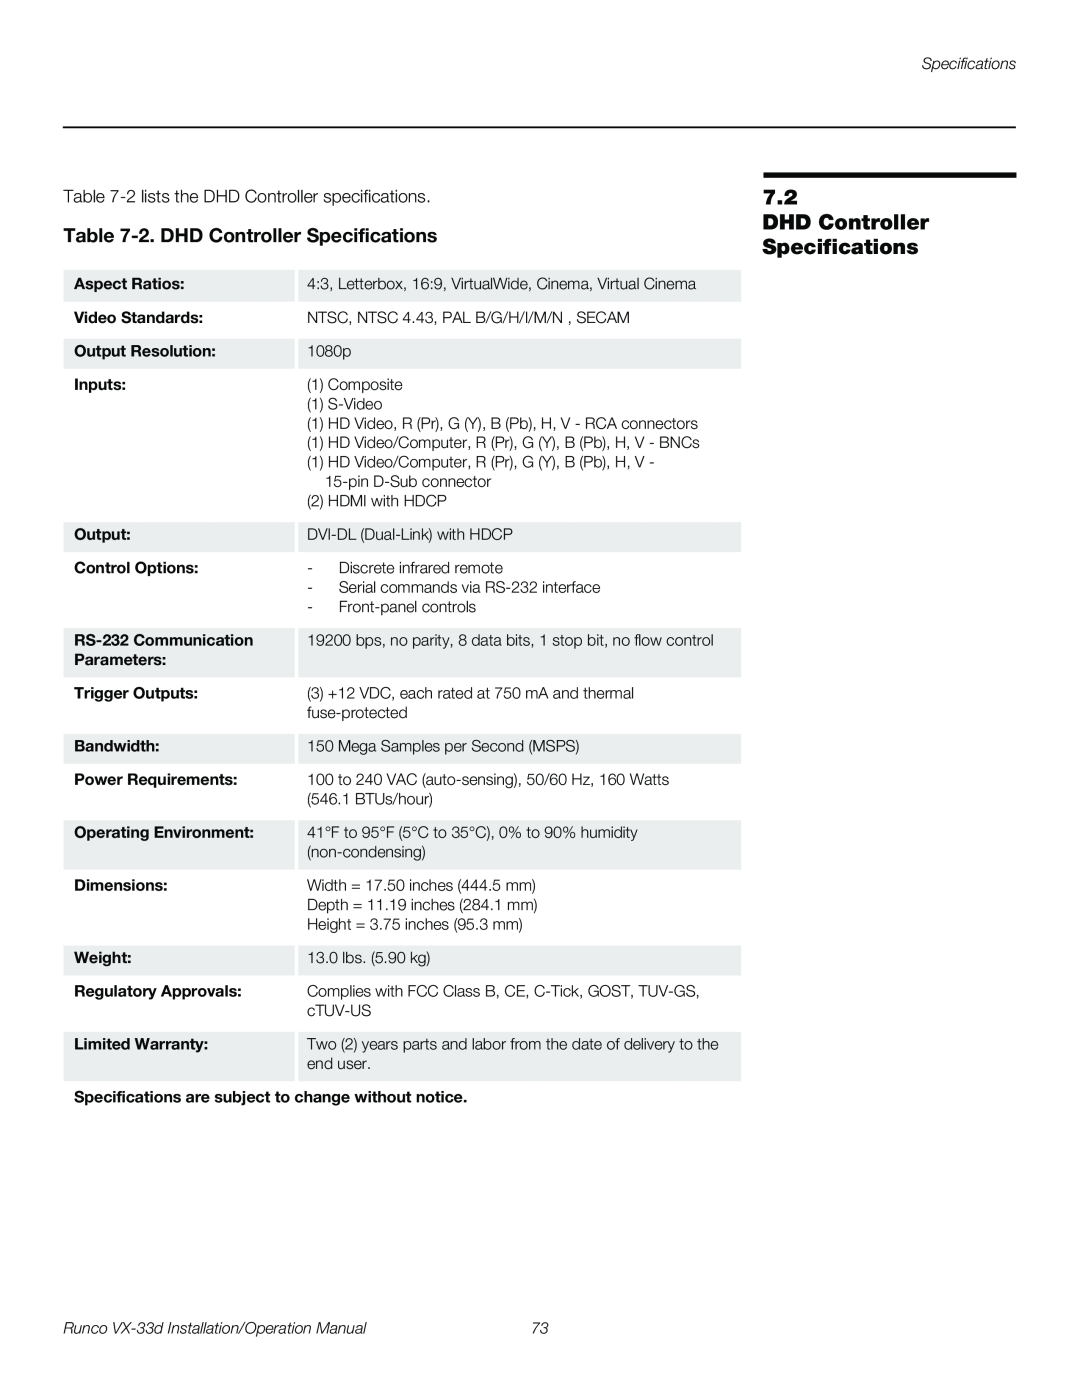 Runco VX-33D operation manual 2. DHD Controller Specifications, Runco VX-33d Installation/Operation Manual 